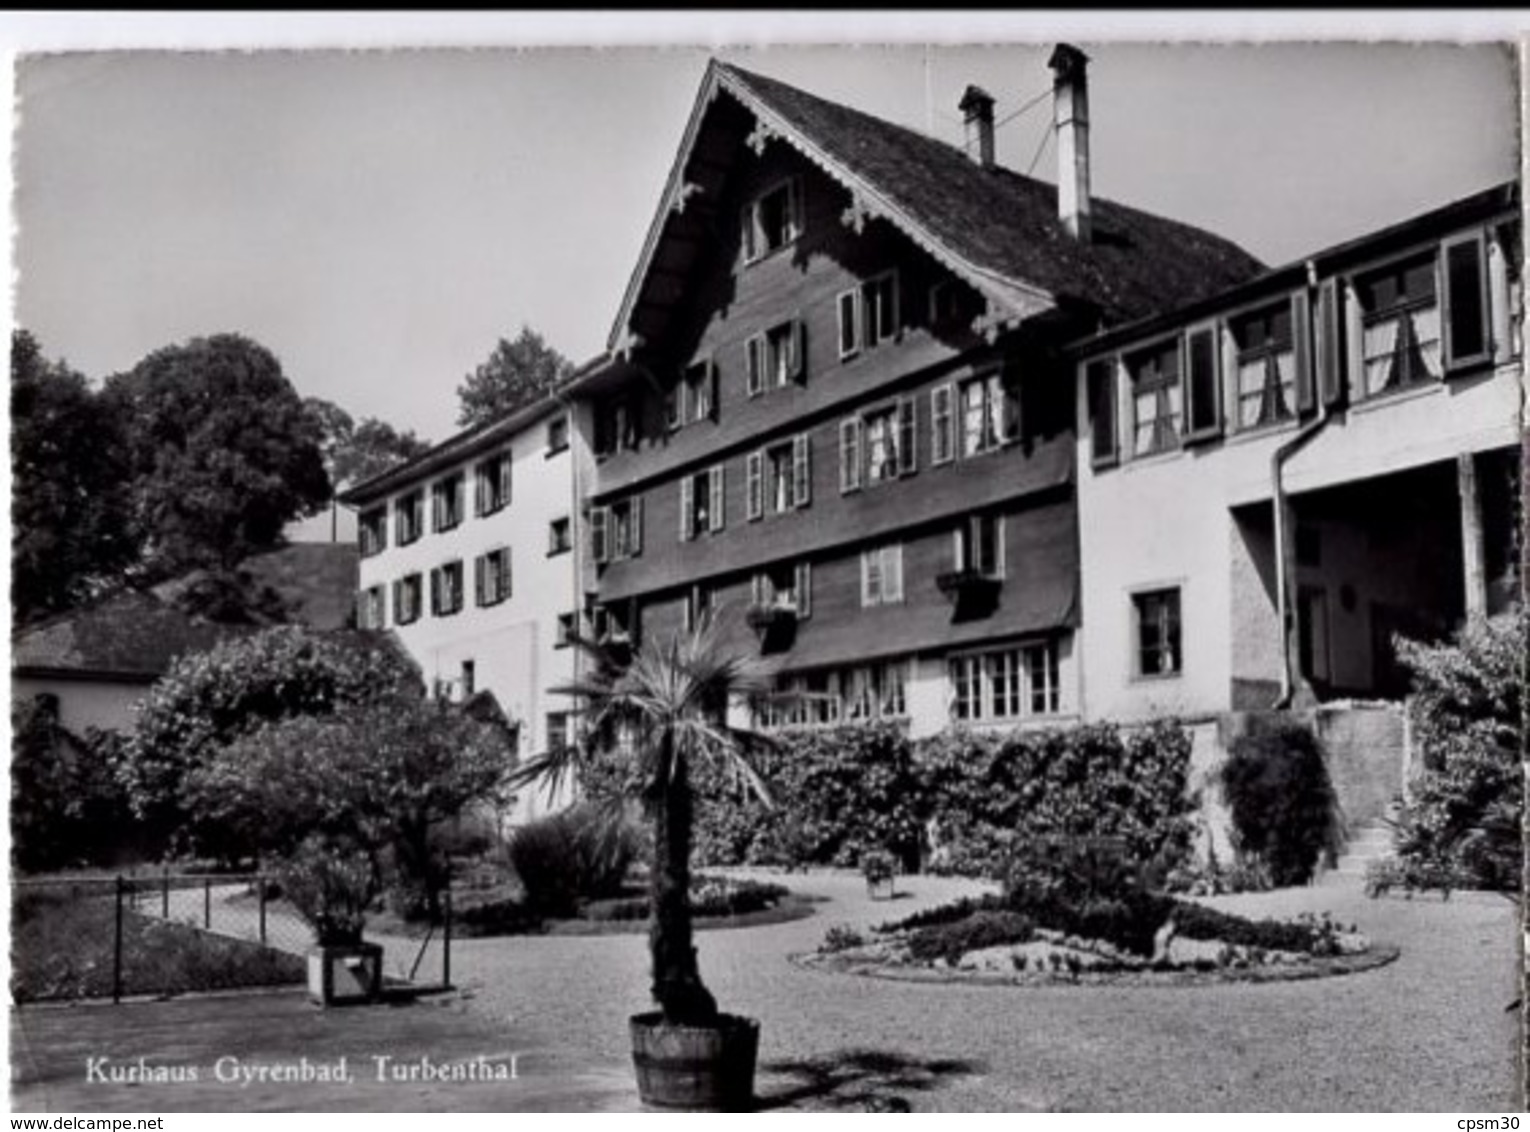 CP Suisse - TURBENTHAL - Kurhaus Gyrenbad - n° 11685 w - noir et blanc, voyagé